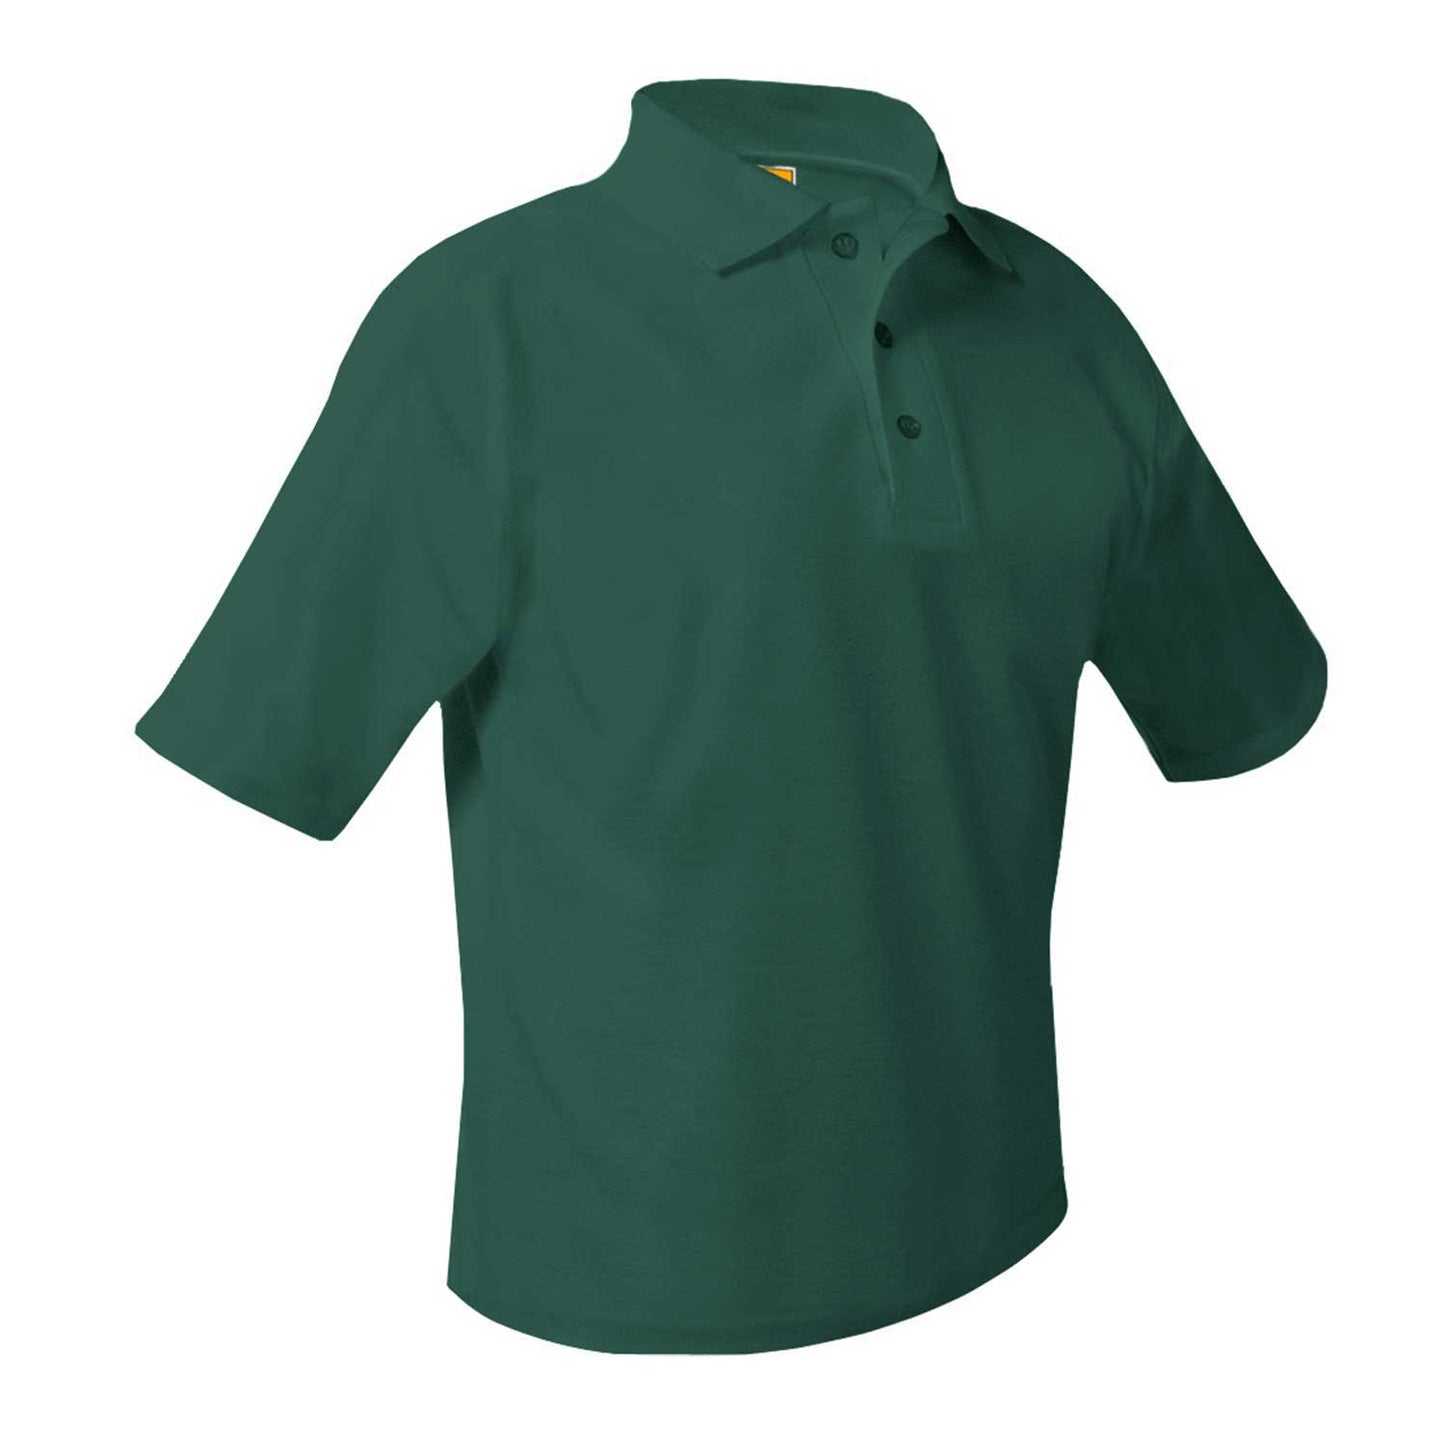 Unisex Pique Polo Shirt, Short Sleeves, Hemmed w/ Logo - 1102